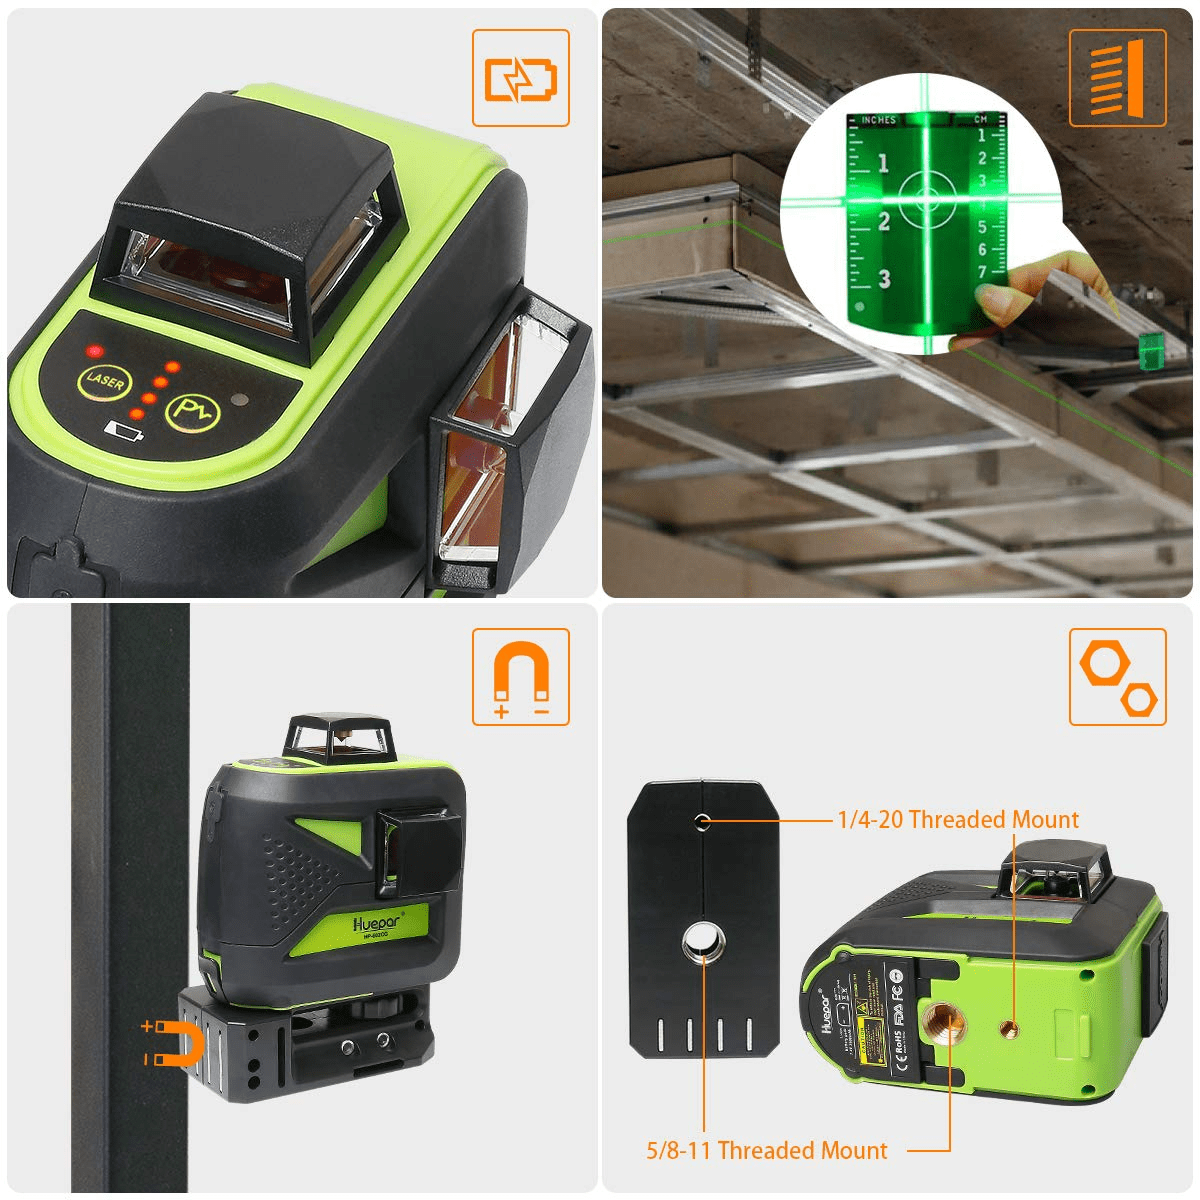 Huepar 2 x 360° Green Beam Cross Line Laser Level Self-Leveling Laser Level  Tools with Magnetic Pivoting Base 602CG 